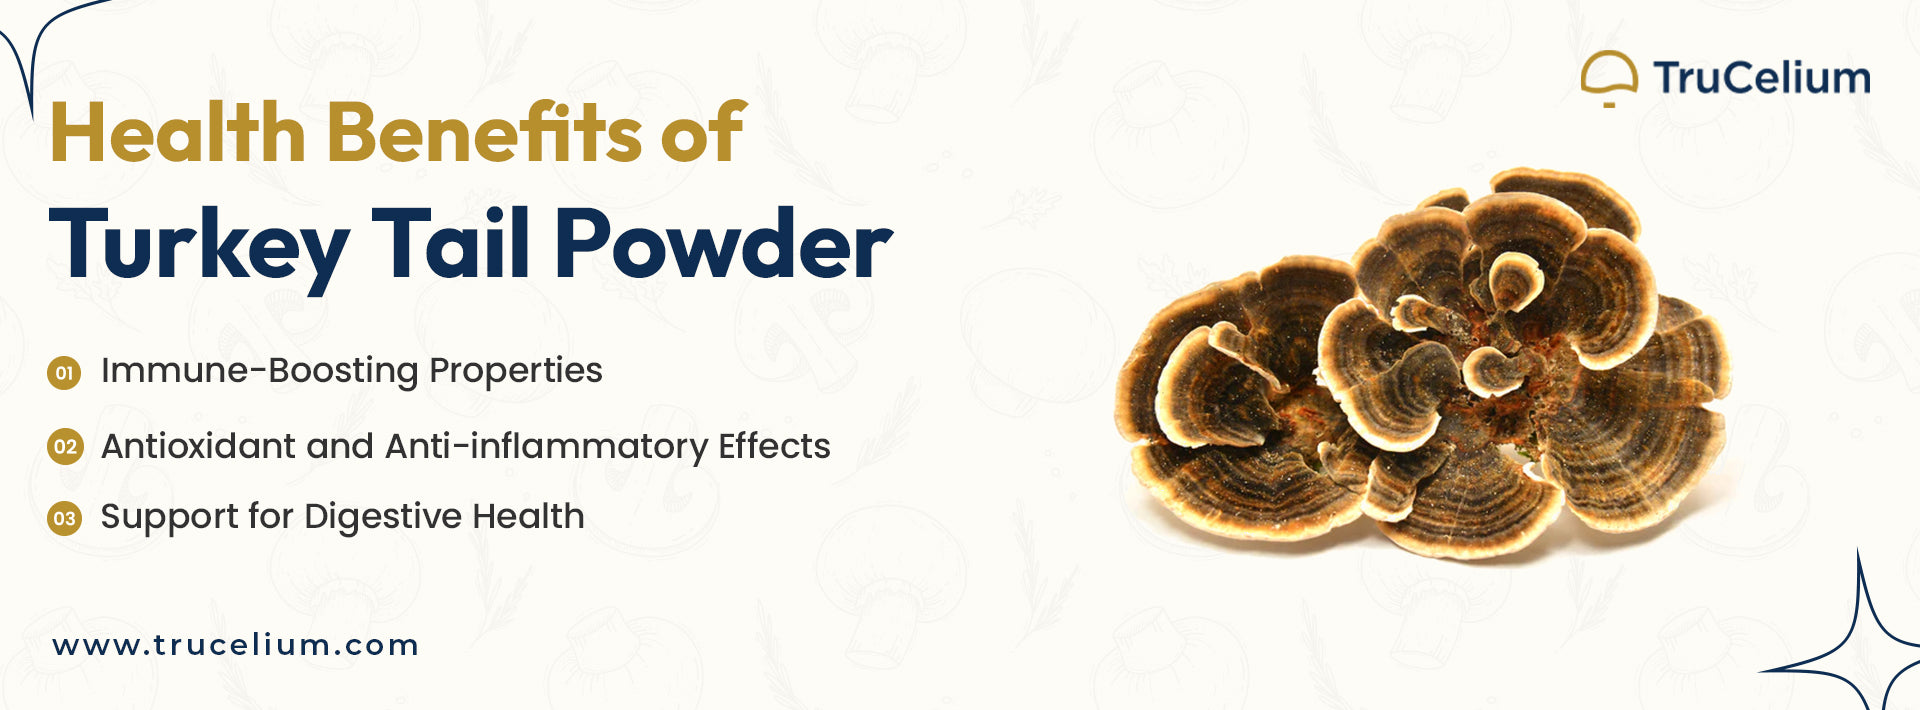 Health Benefits of Turkey Tail Powder